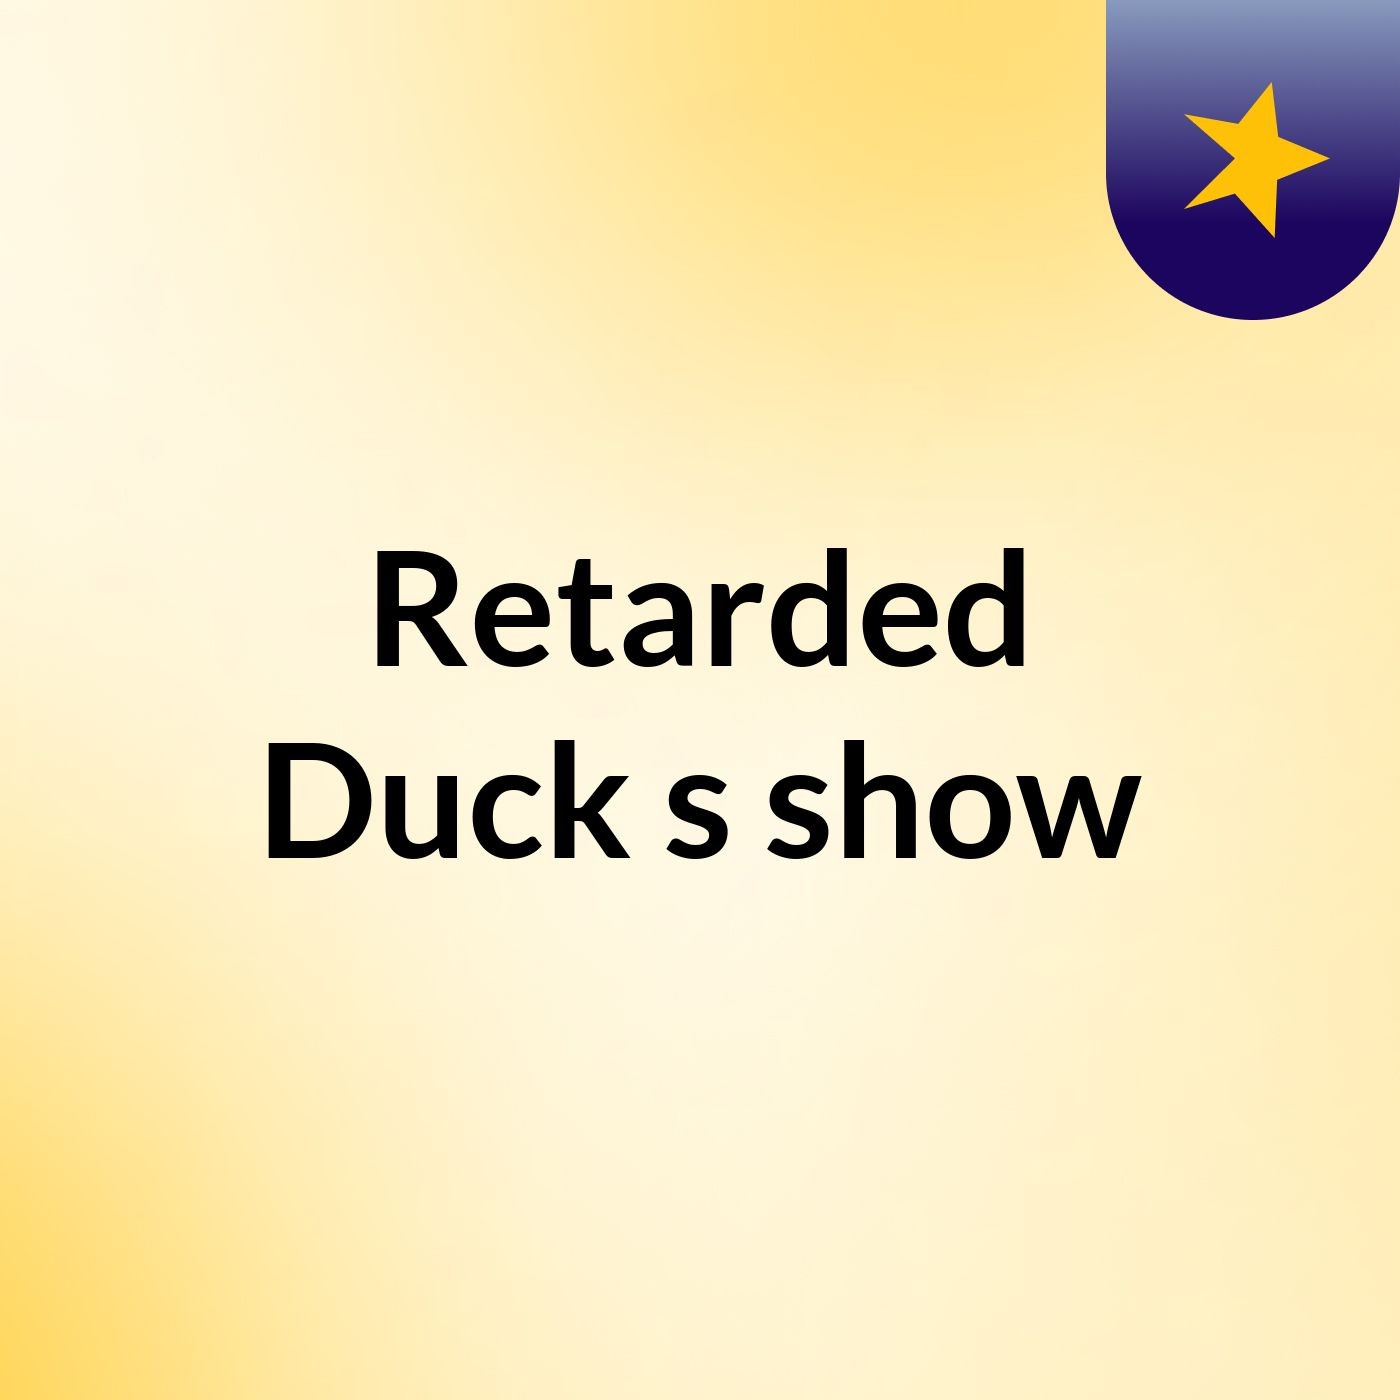 Retarded Duck's show